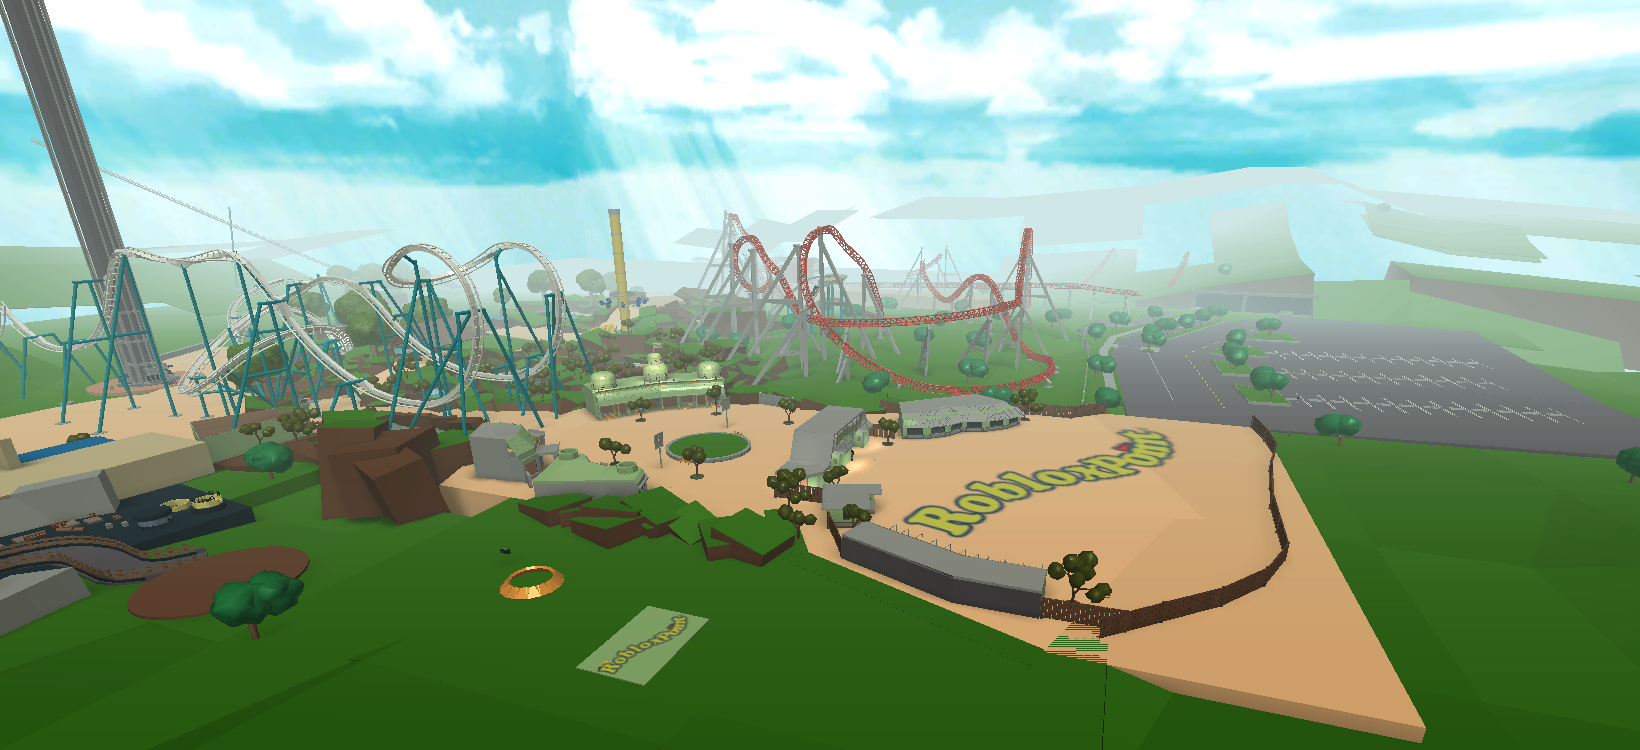 Spotlight Starmarine614 S Theme Park Success Story Roblox Blog - roblox amusement park games